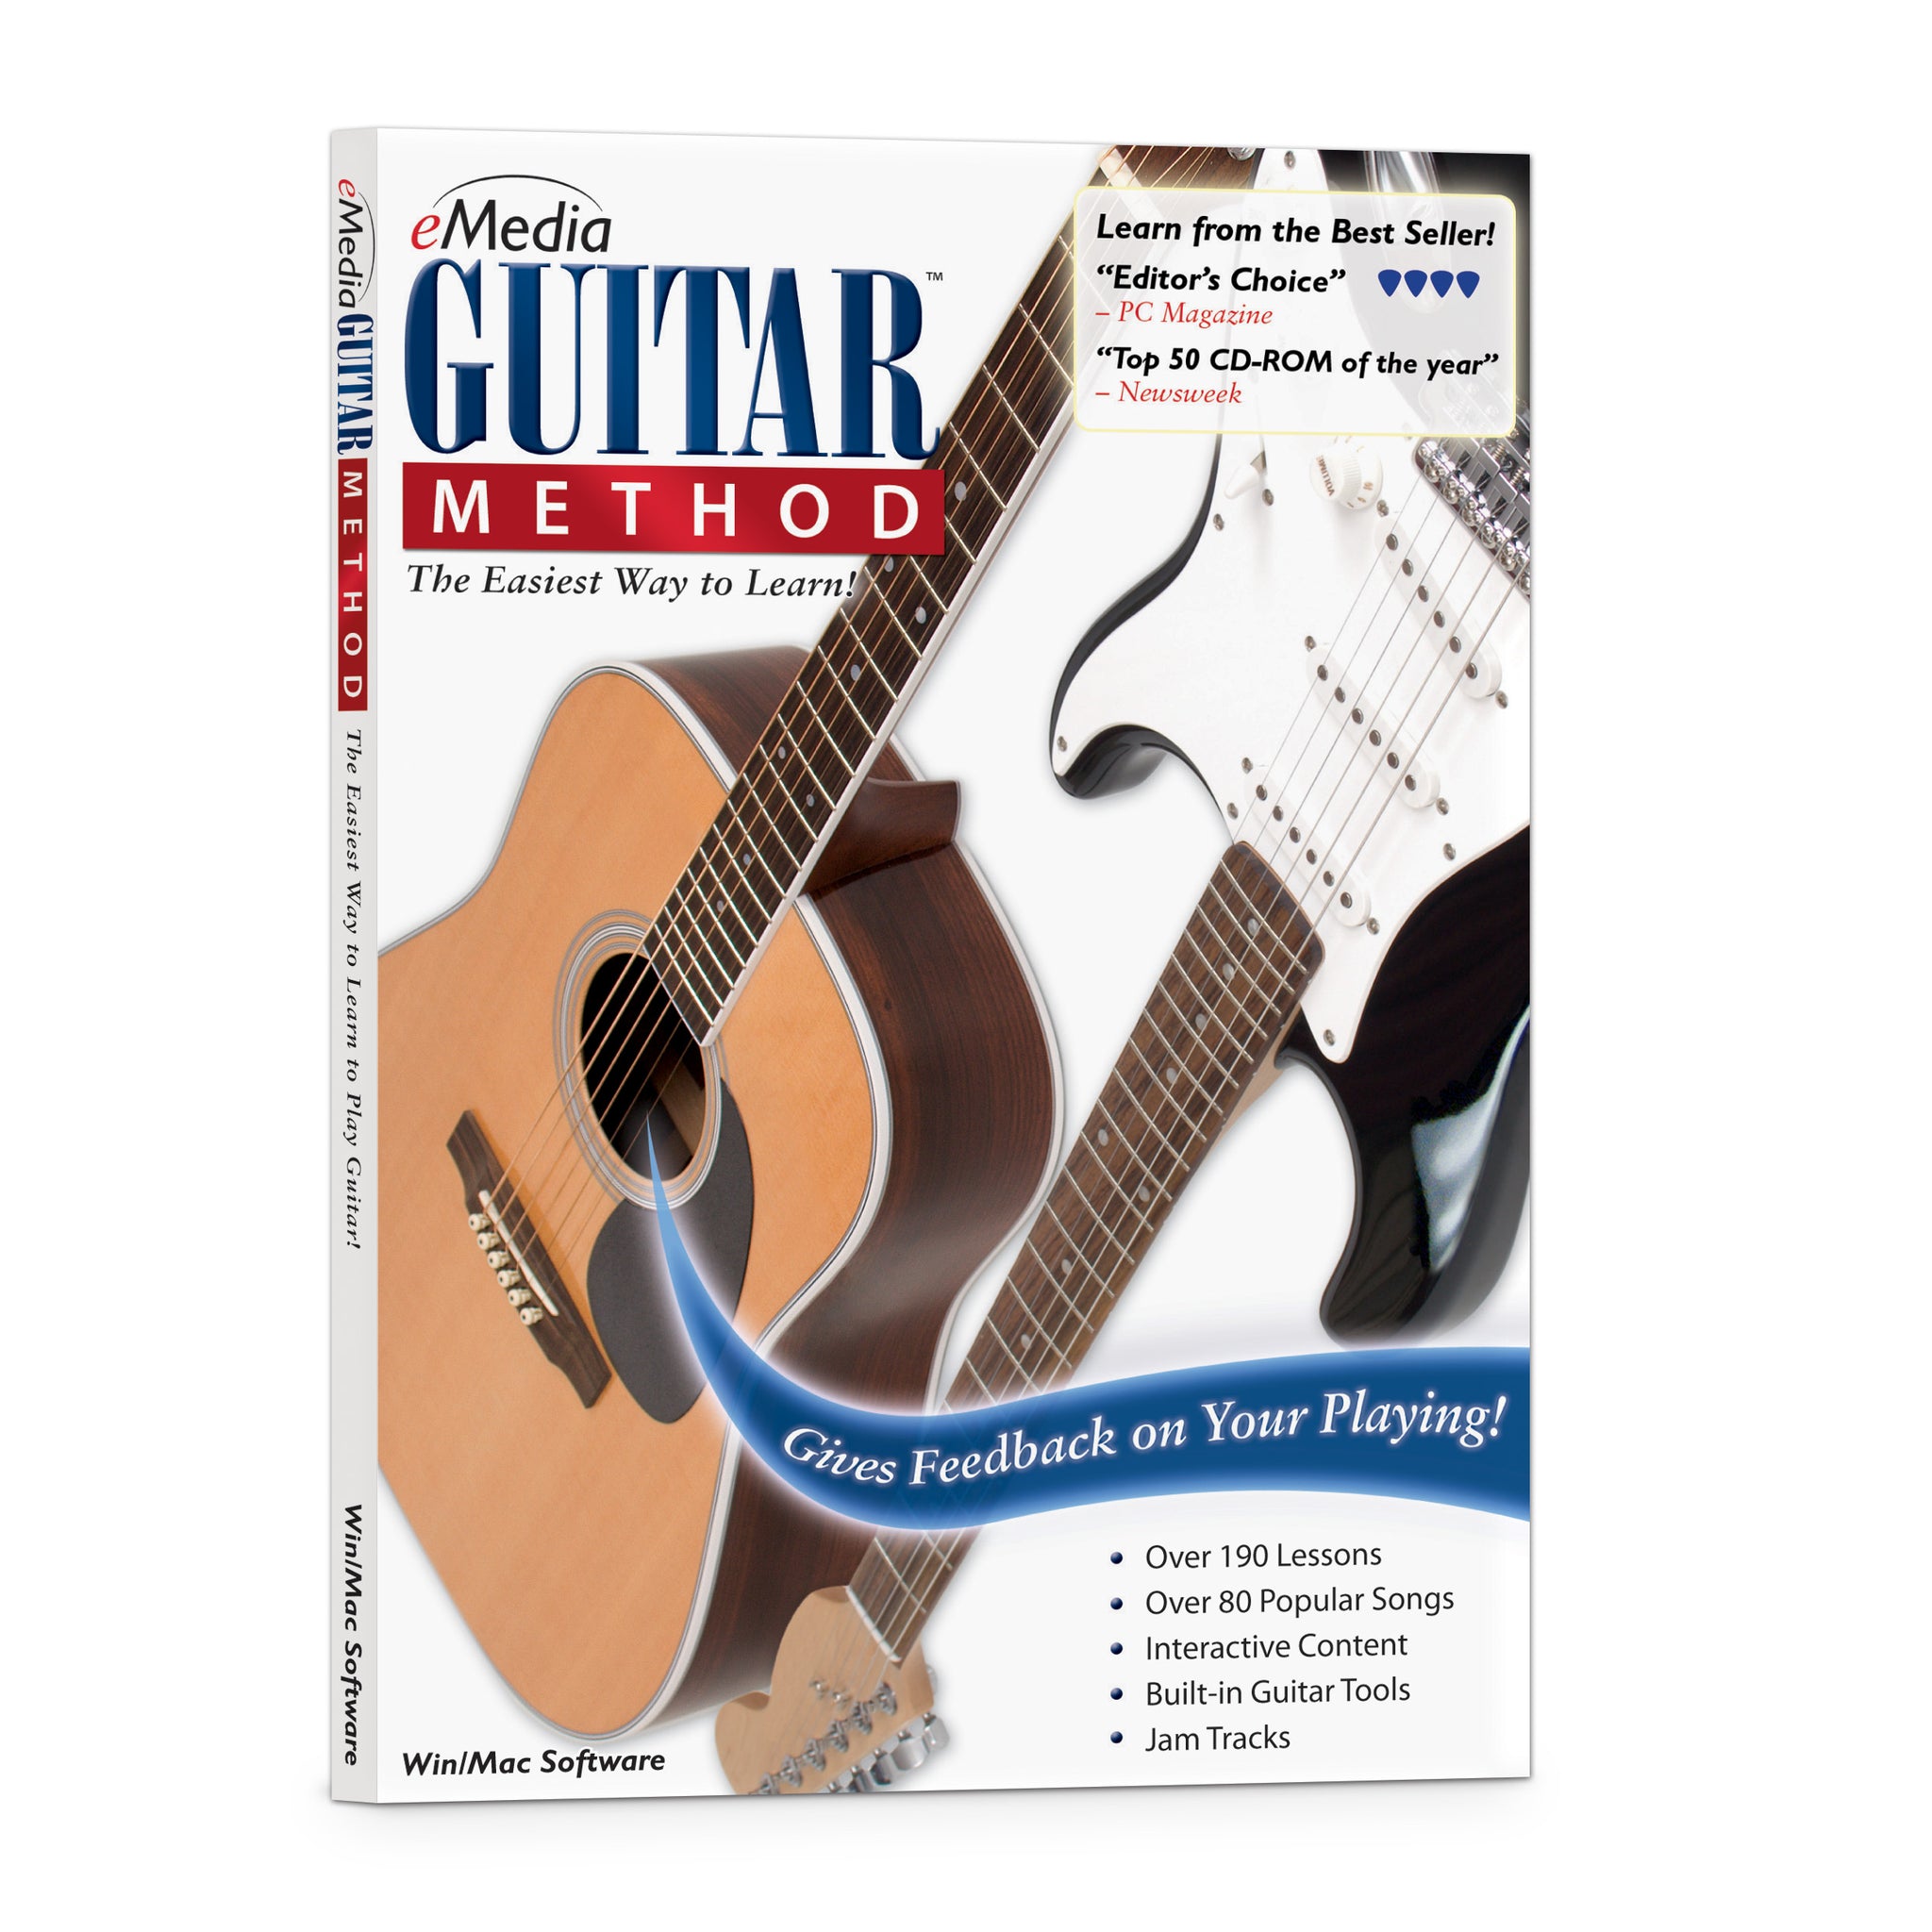 New York City Guitar School Applying Your Guitar Knowledge To Ukulele - New  York City Guitar School